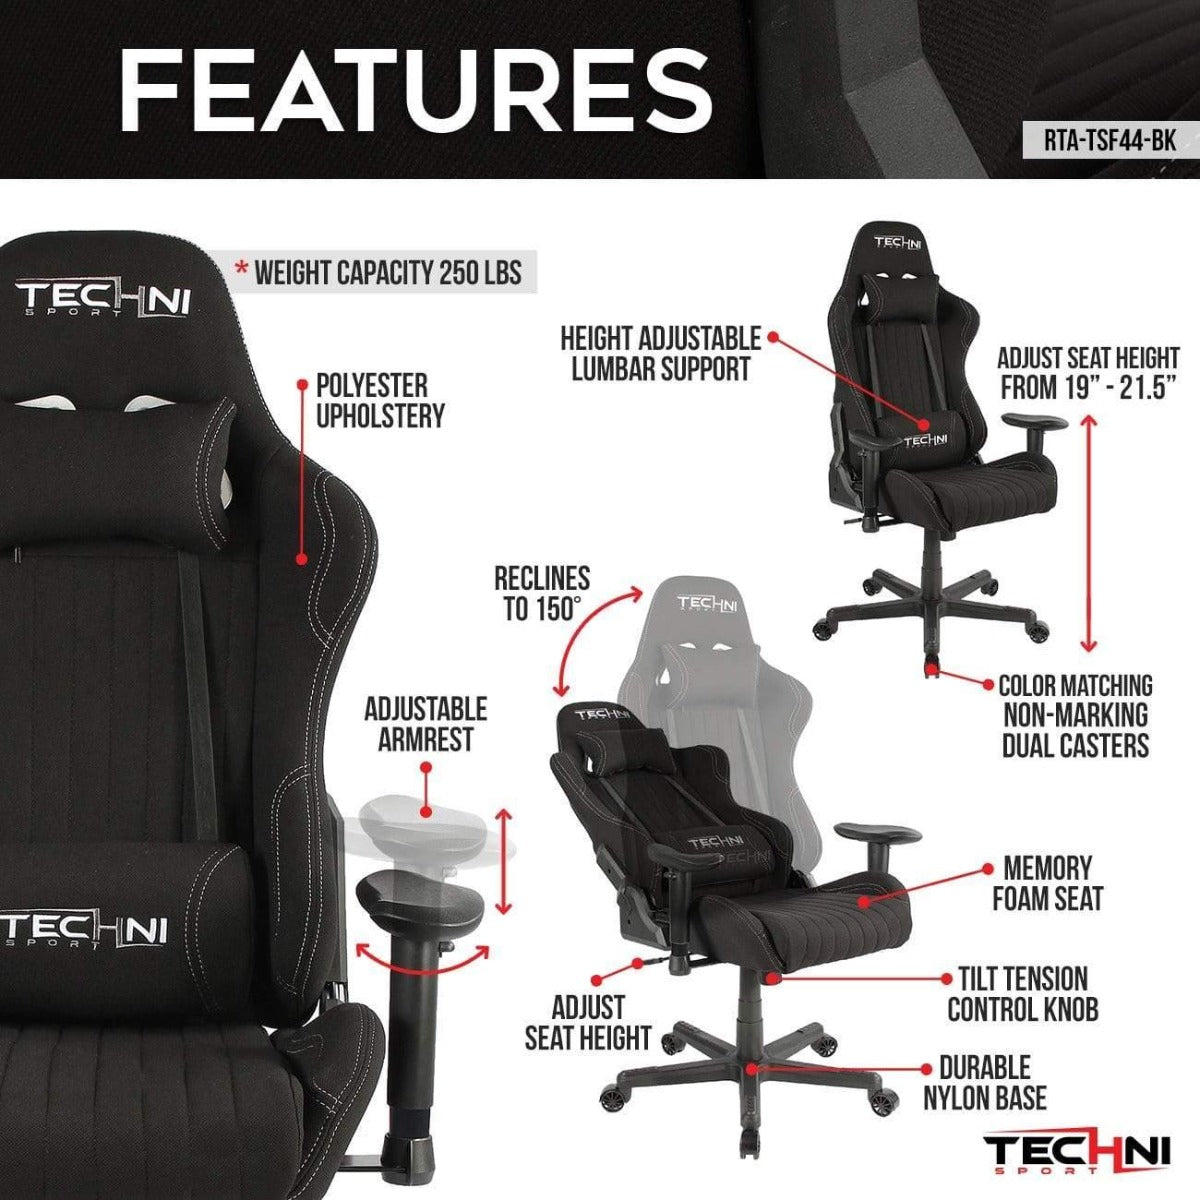 Techni Sport TS-F44 Black Fabric Ergonomic High Back Racer Style PC Gaming Chair RTA-TSF44-BK Features